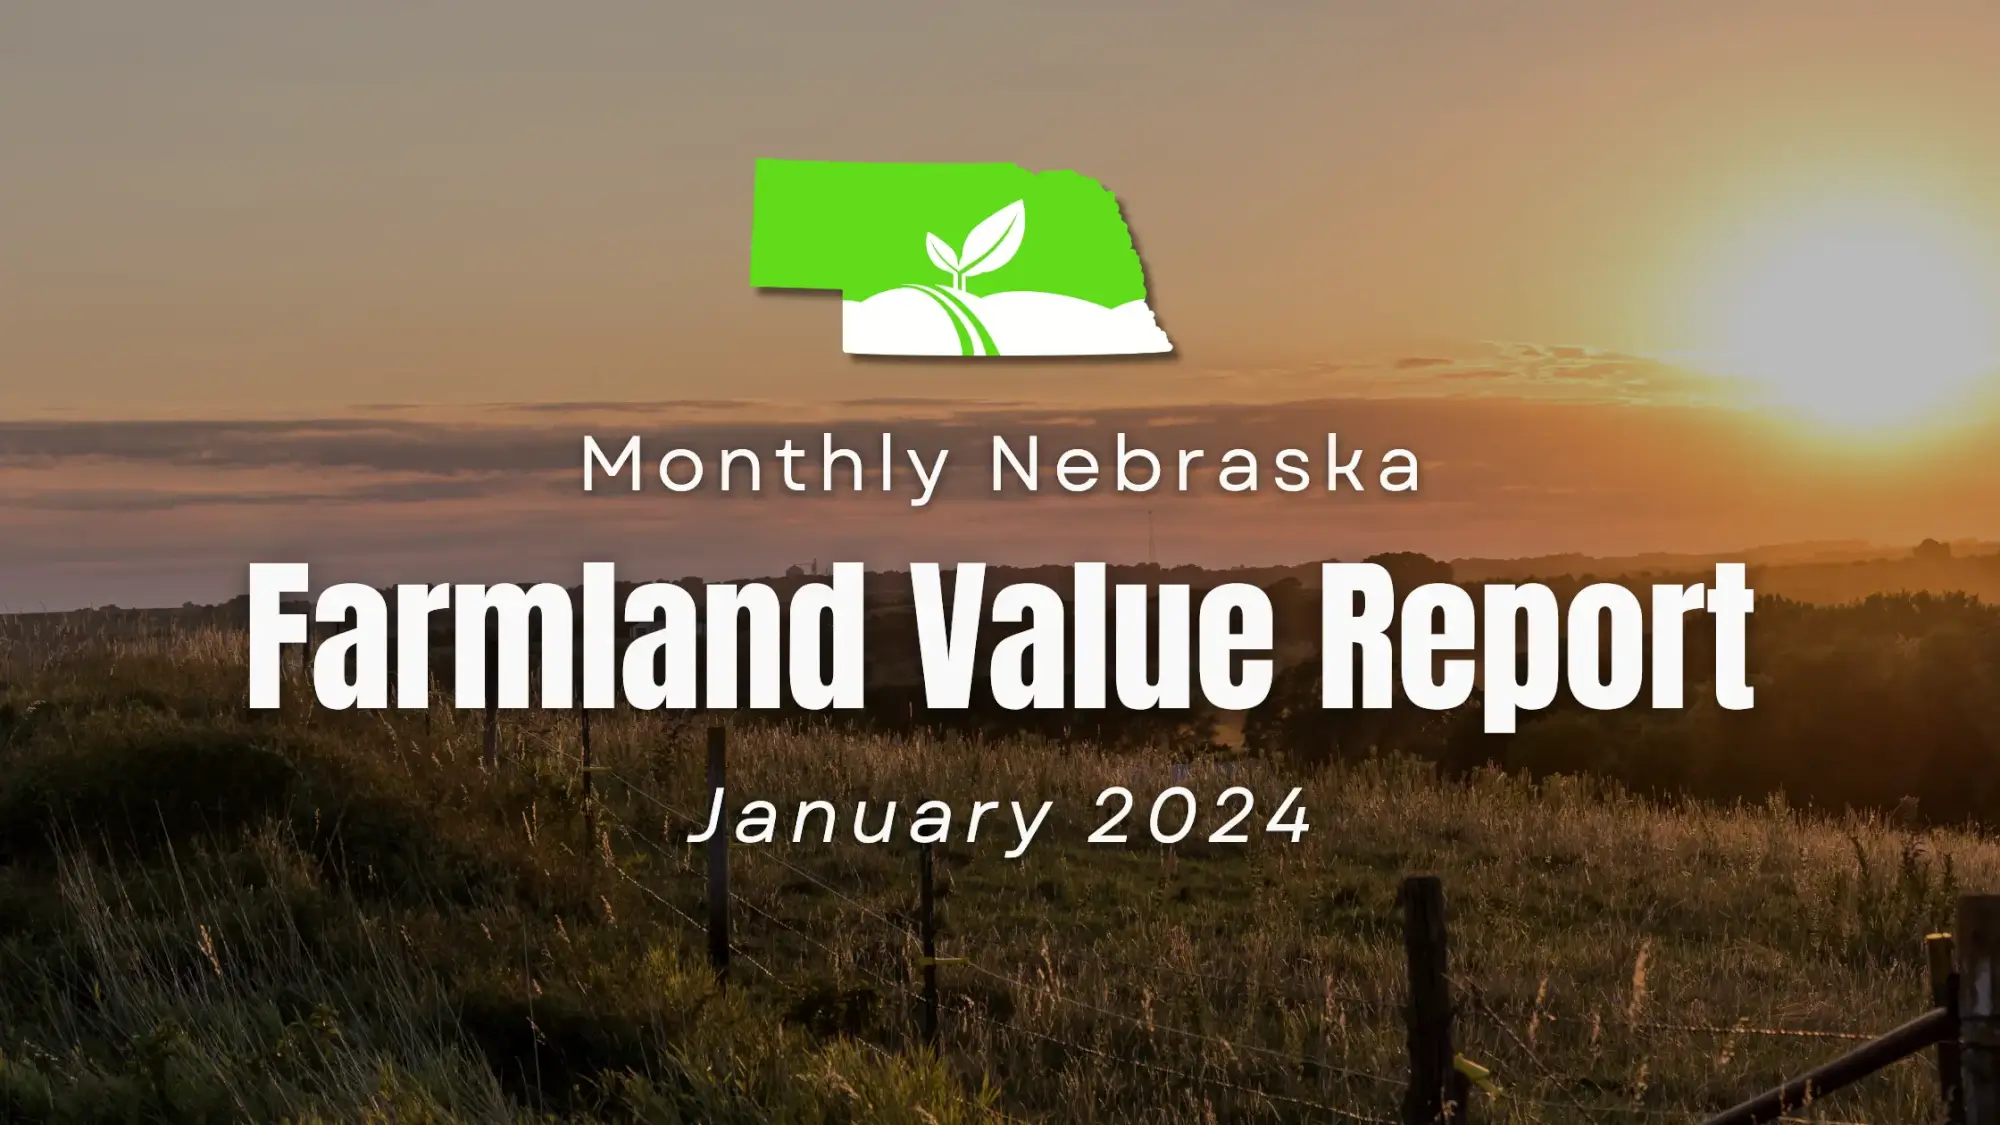 Nebraska Farmland Value Monthly Report January 2024